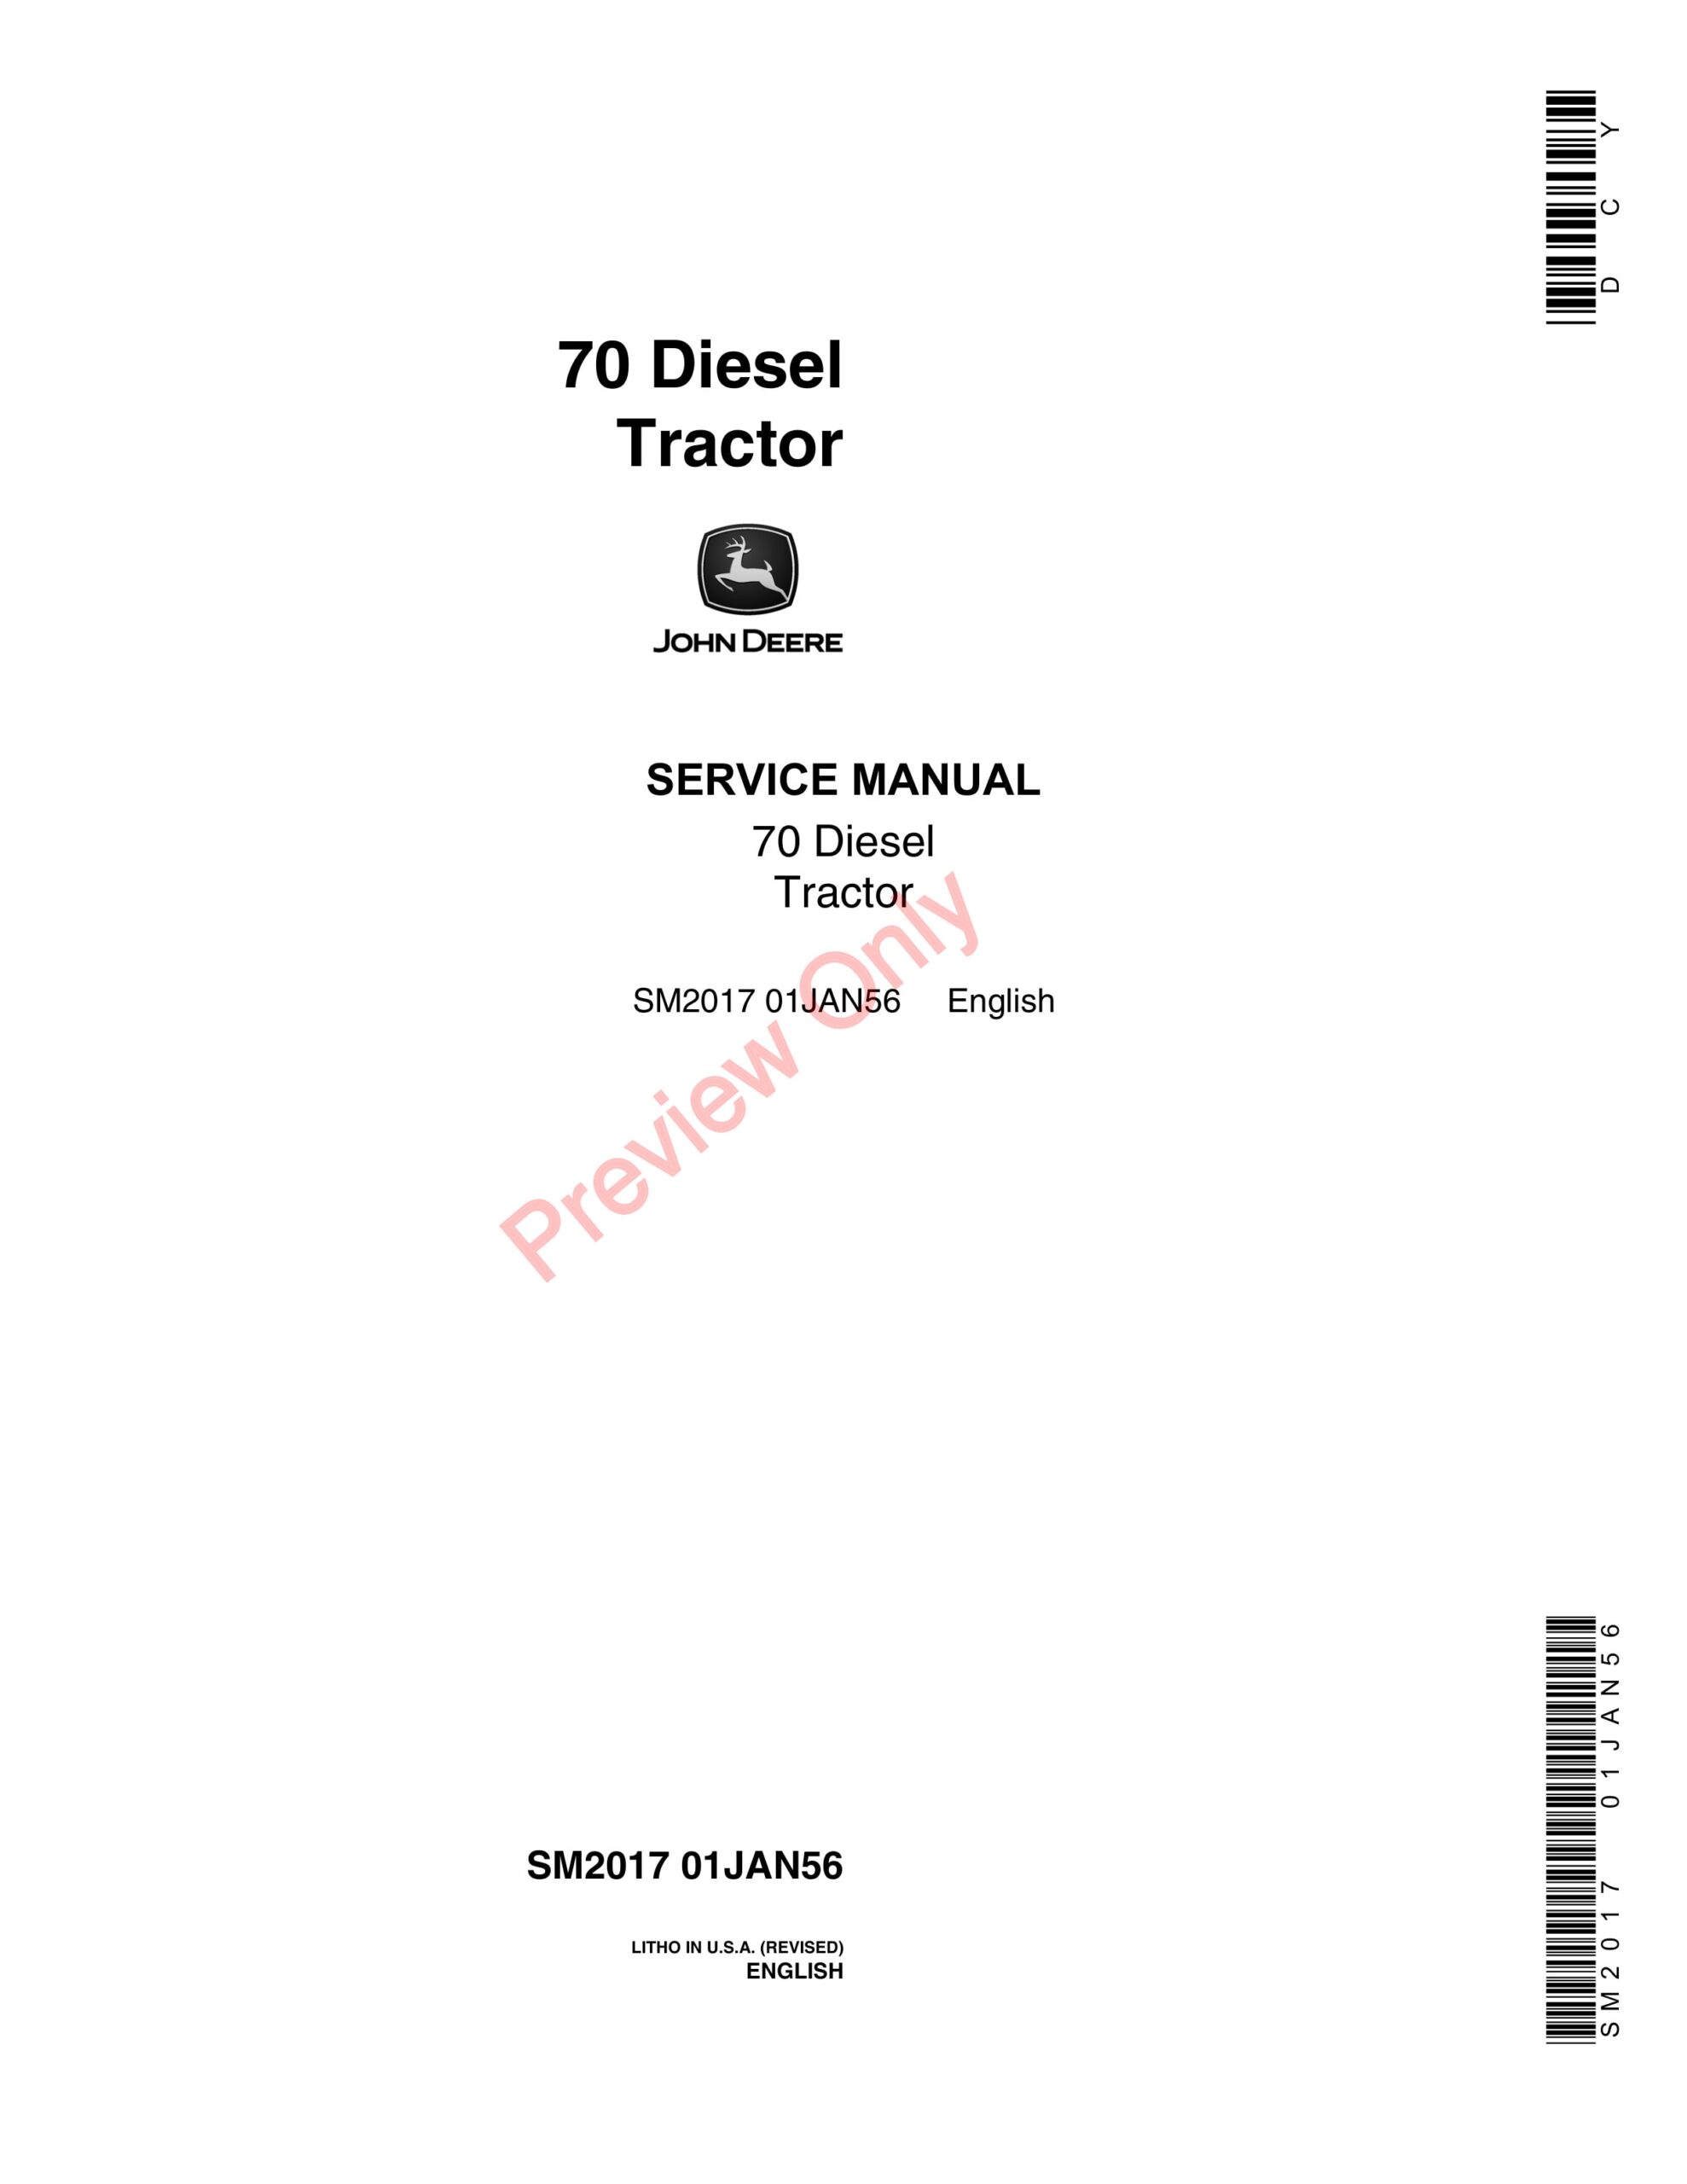 John Deere 70 General-Purpose and Standard (Diesel) Tractor Service Manual SM2017 01JAN56-1